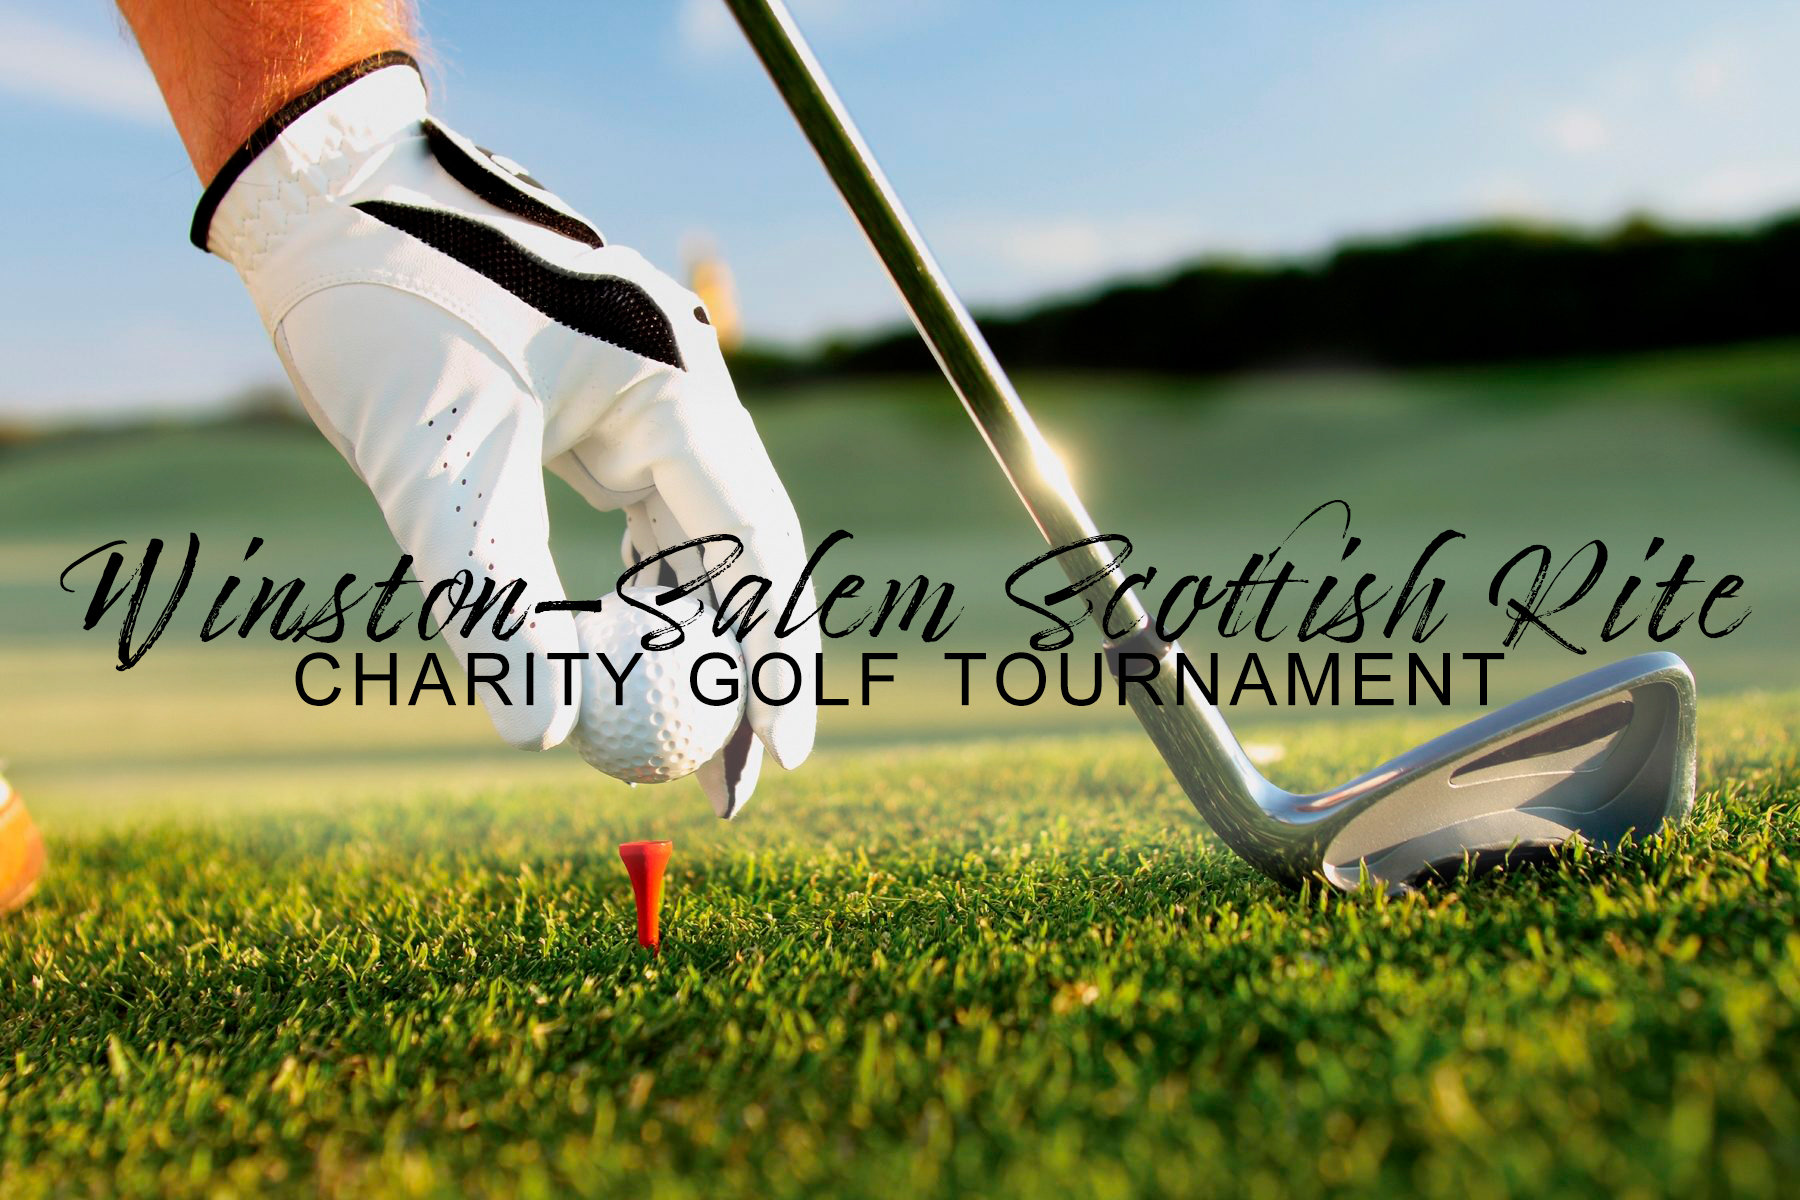 Annual Golf Tournament of the Scottish Rite Valley of WinstonSalem